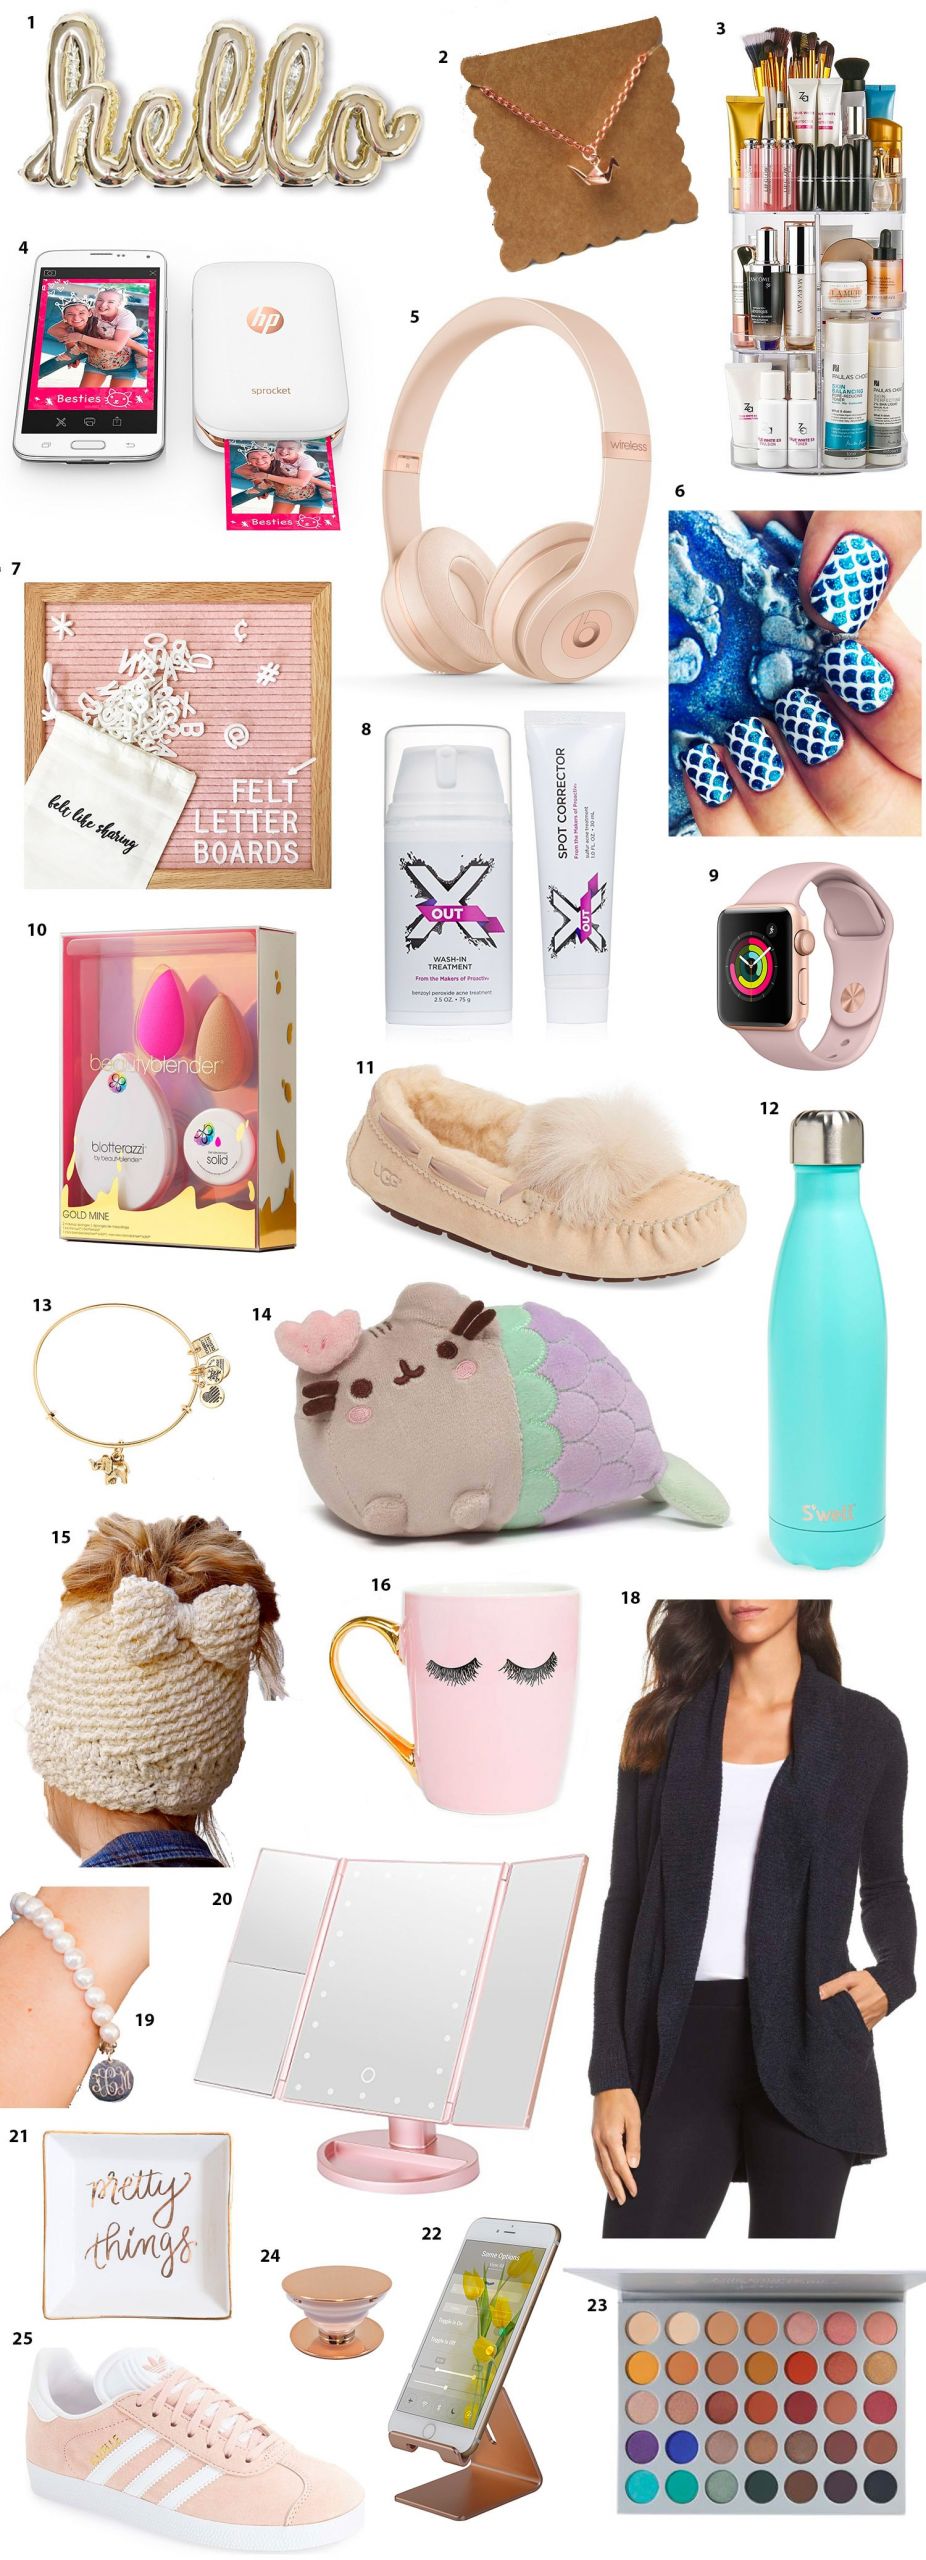 Teen Girl Christmas Gift Ideas
 Top Gifts for Teens This Christmas